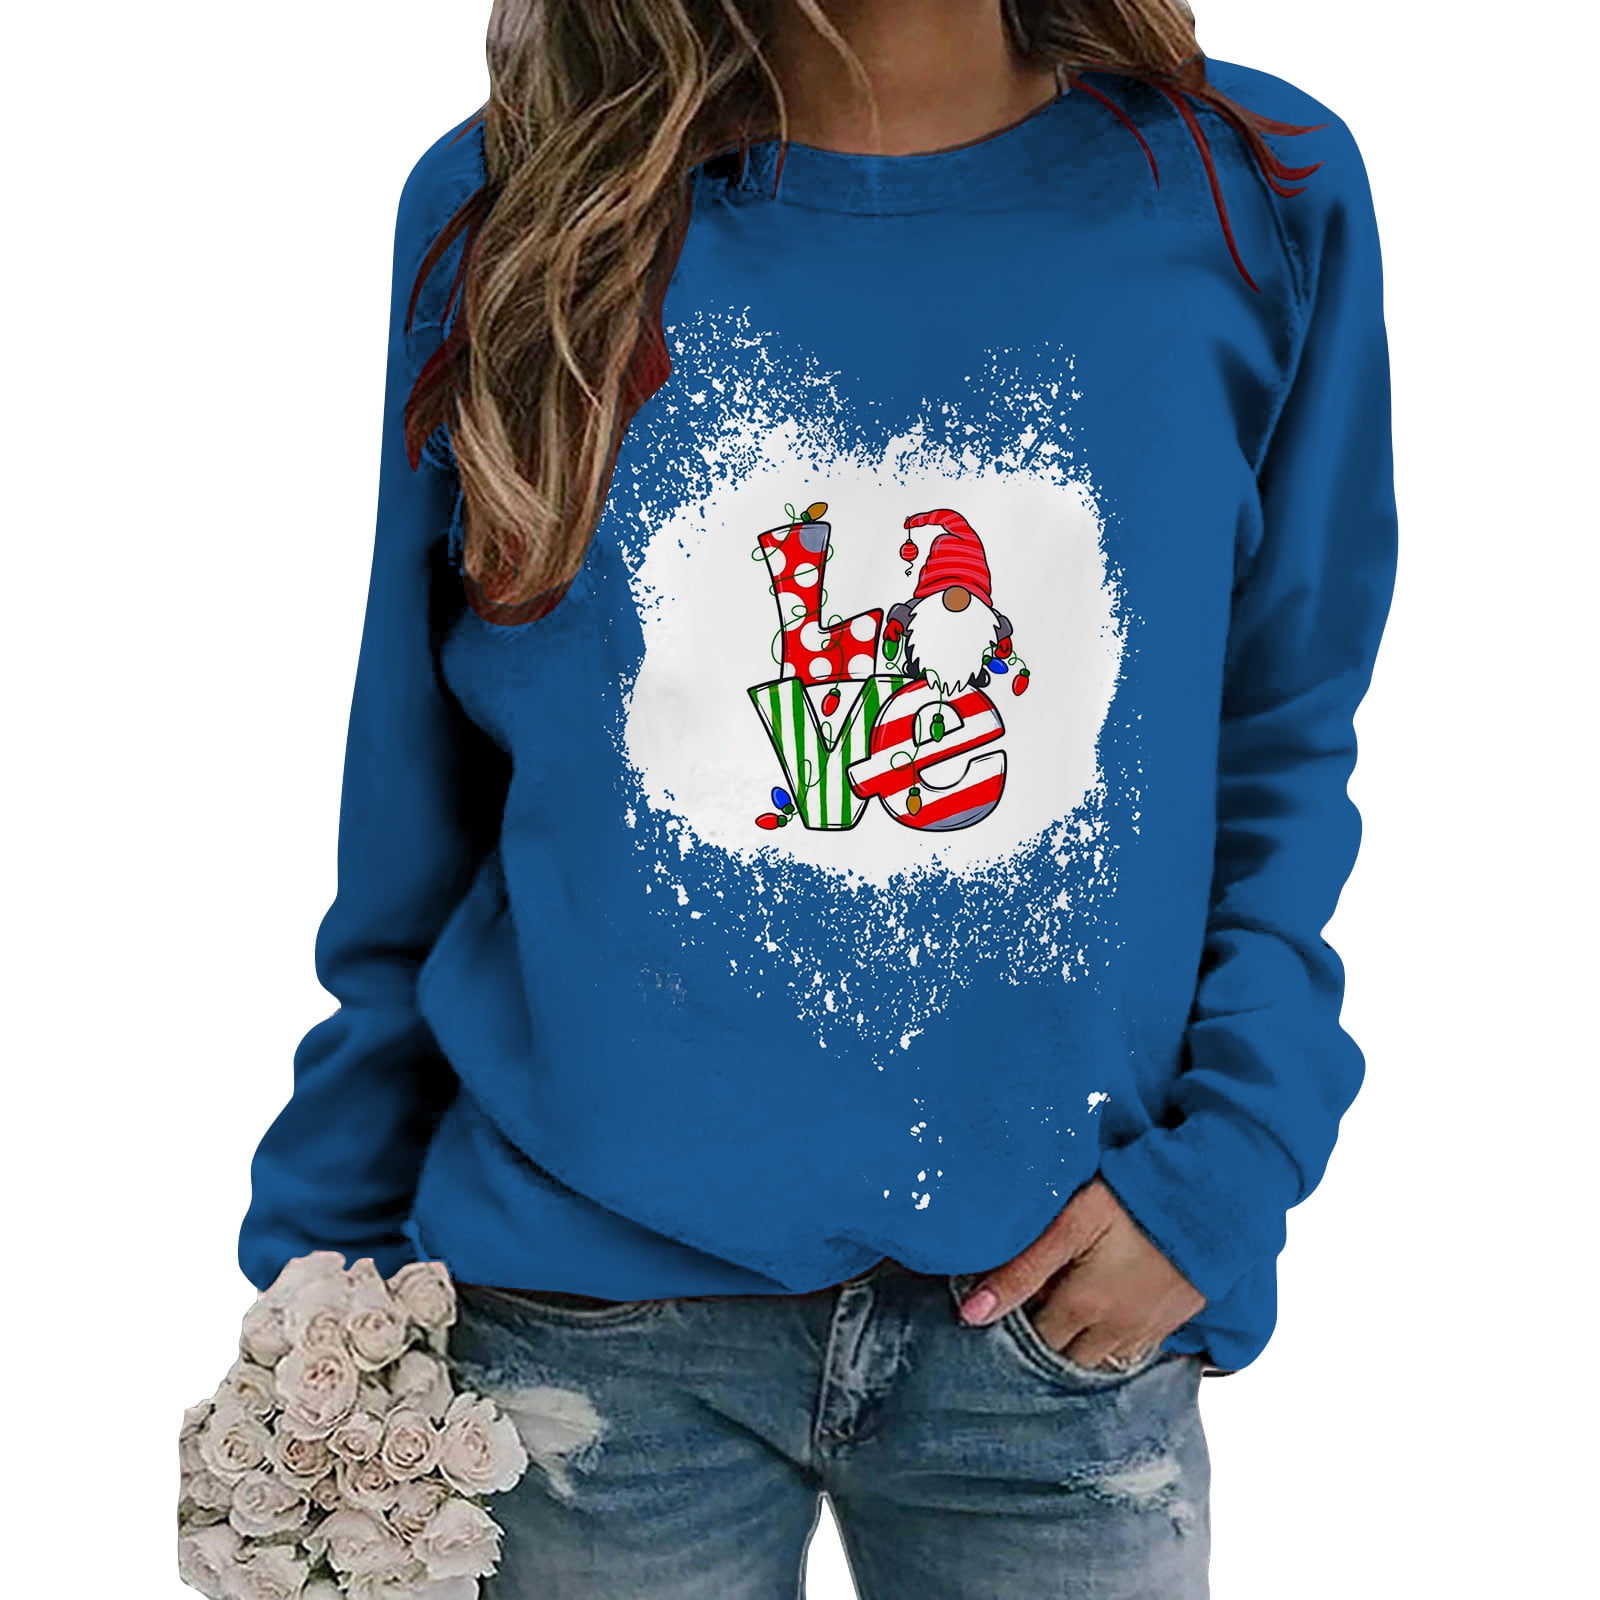 JWZUY Women Winter Pullover Spring Jumper V Neck Long Sleeve Outwear Cute  Gnome Print Sweatshirts Christmas Sweatshirt Gray S 